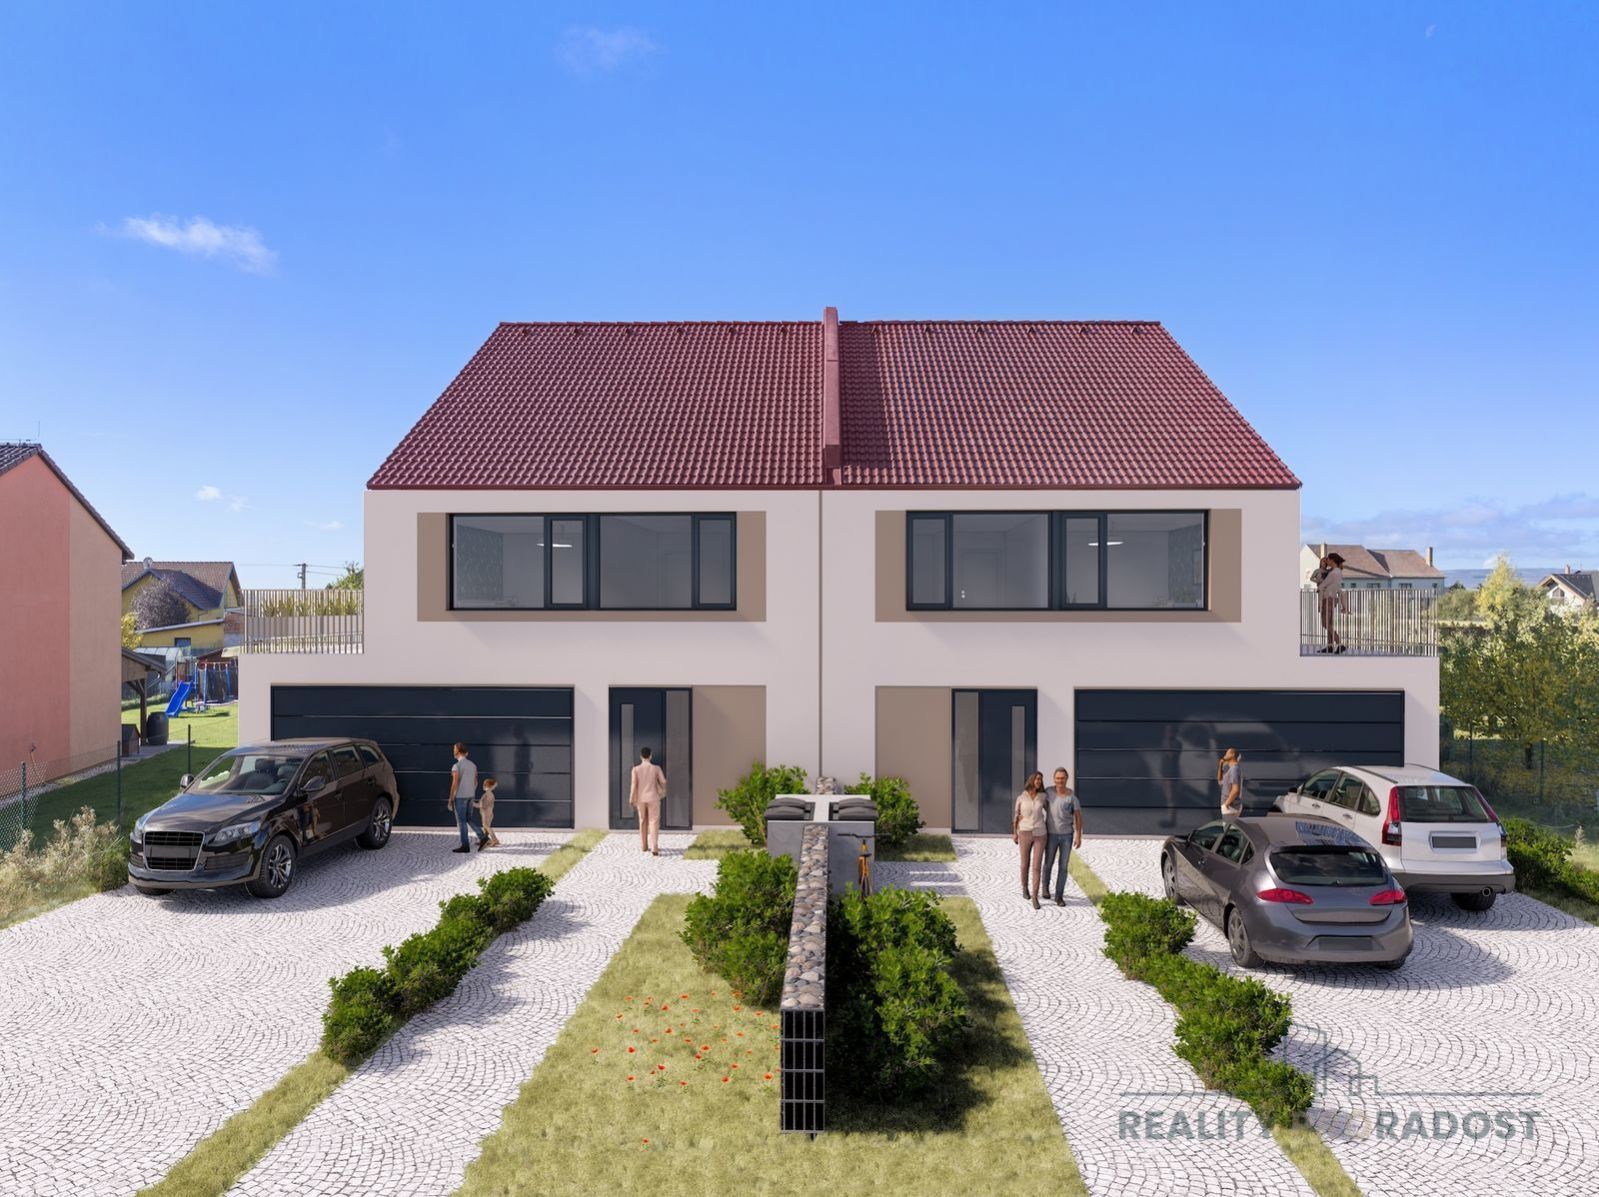 Prodej rodinného domu 4+kk, s garáží, pozemkem 608 m2, Medlov - Brno venkov, obrázek č. 1